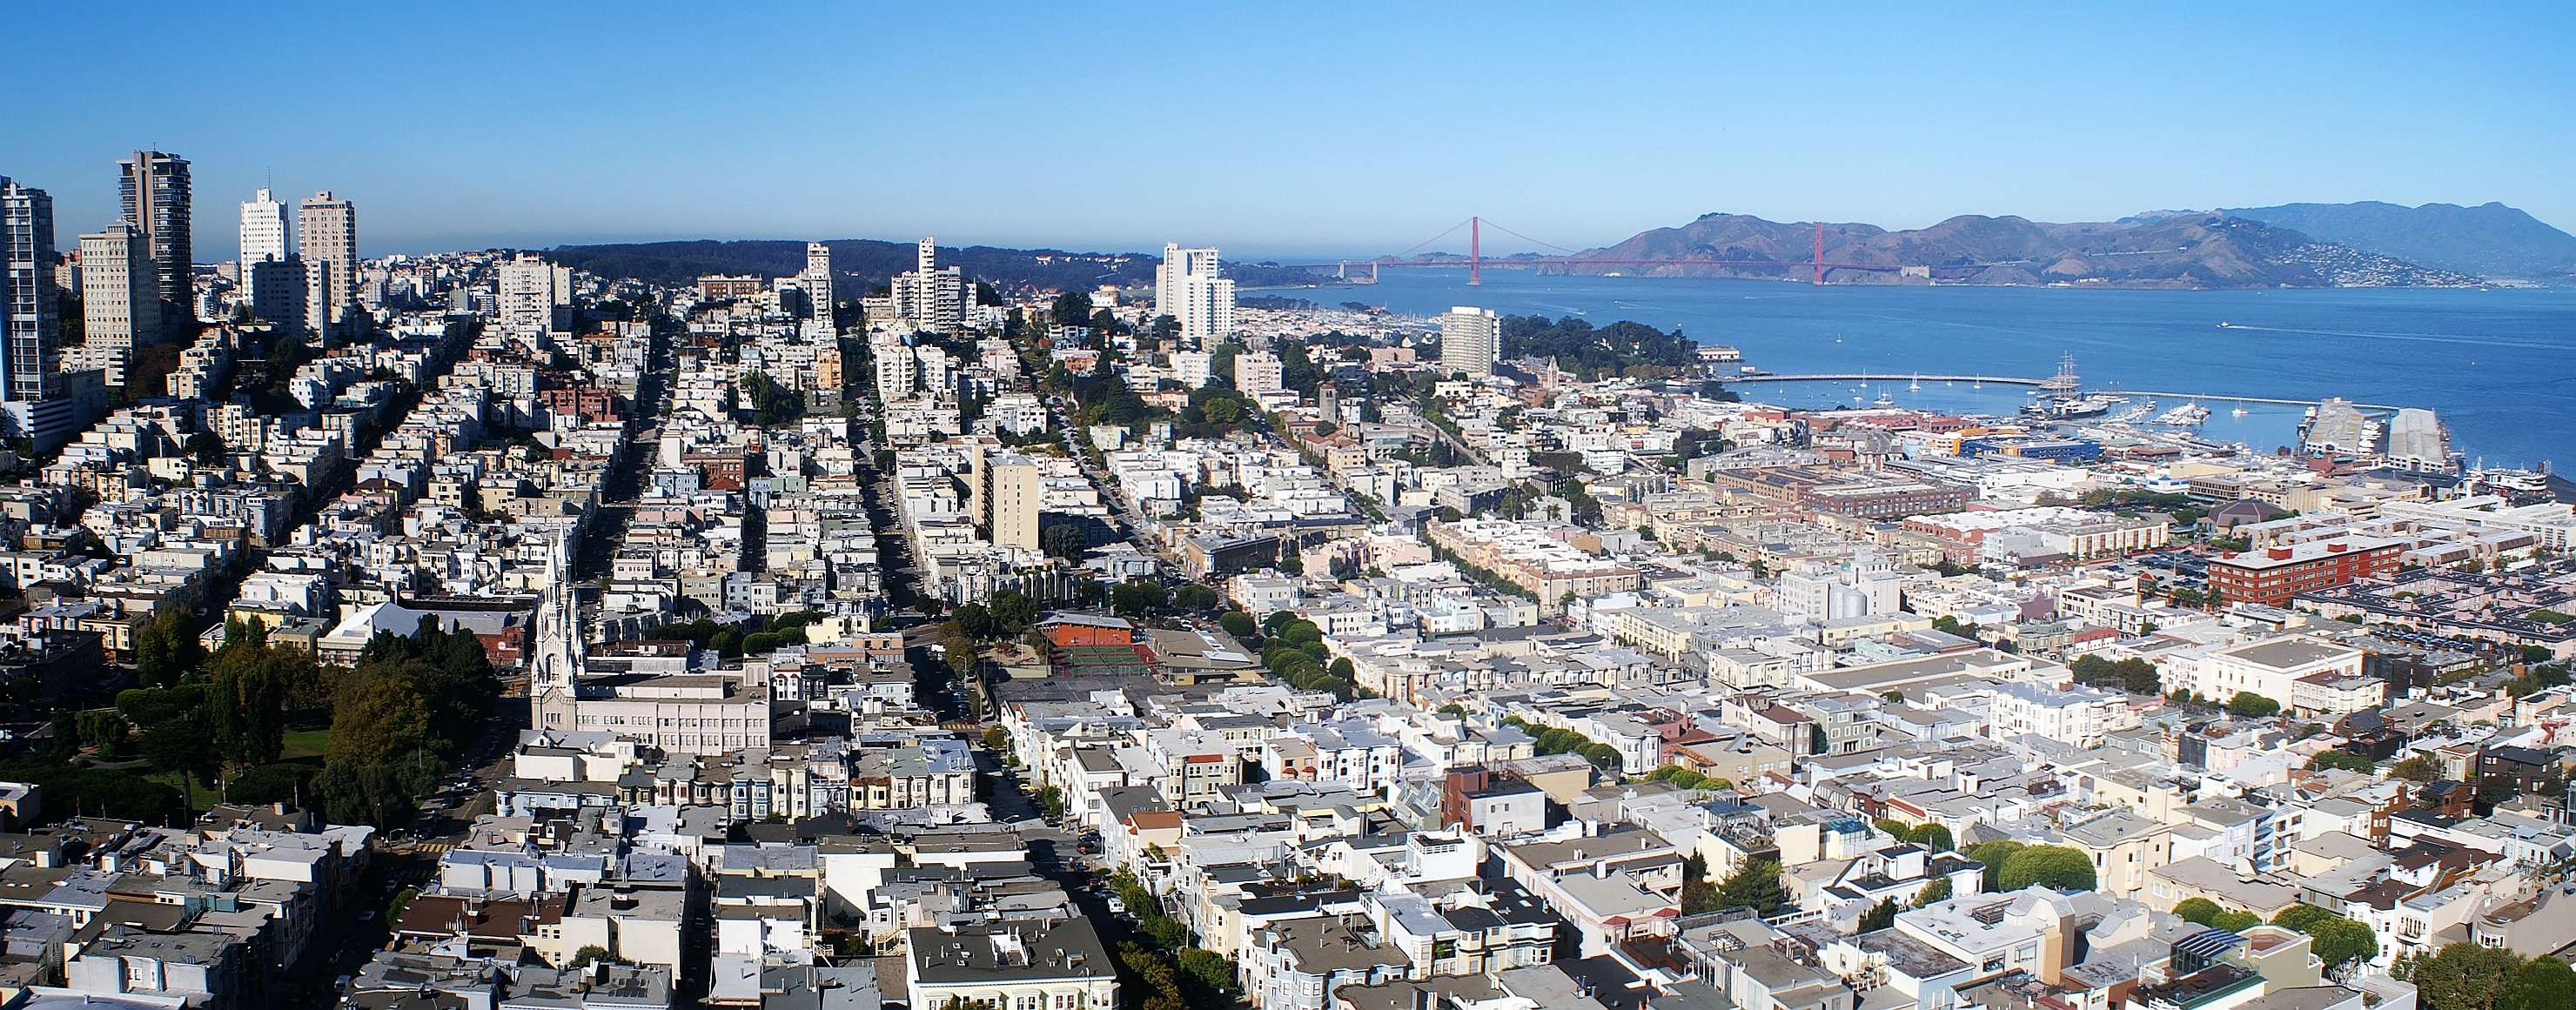 San Francisco  |  Russian Hill and Golden Gate Bridge